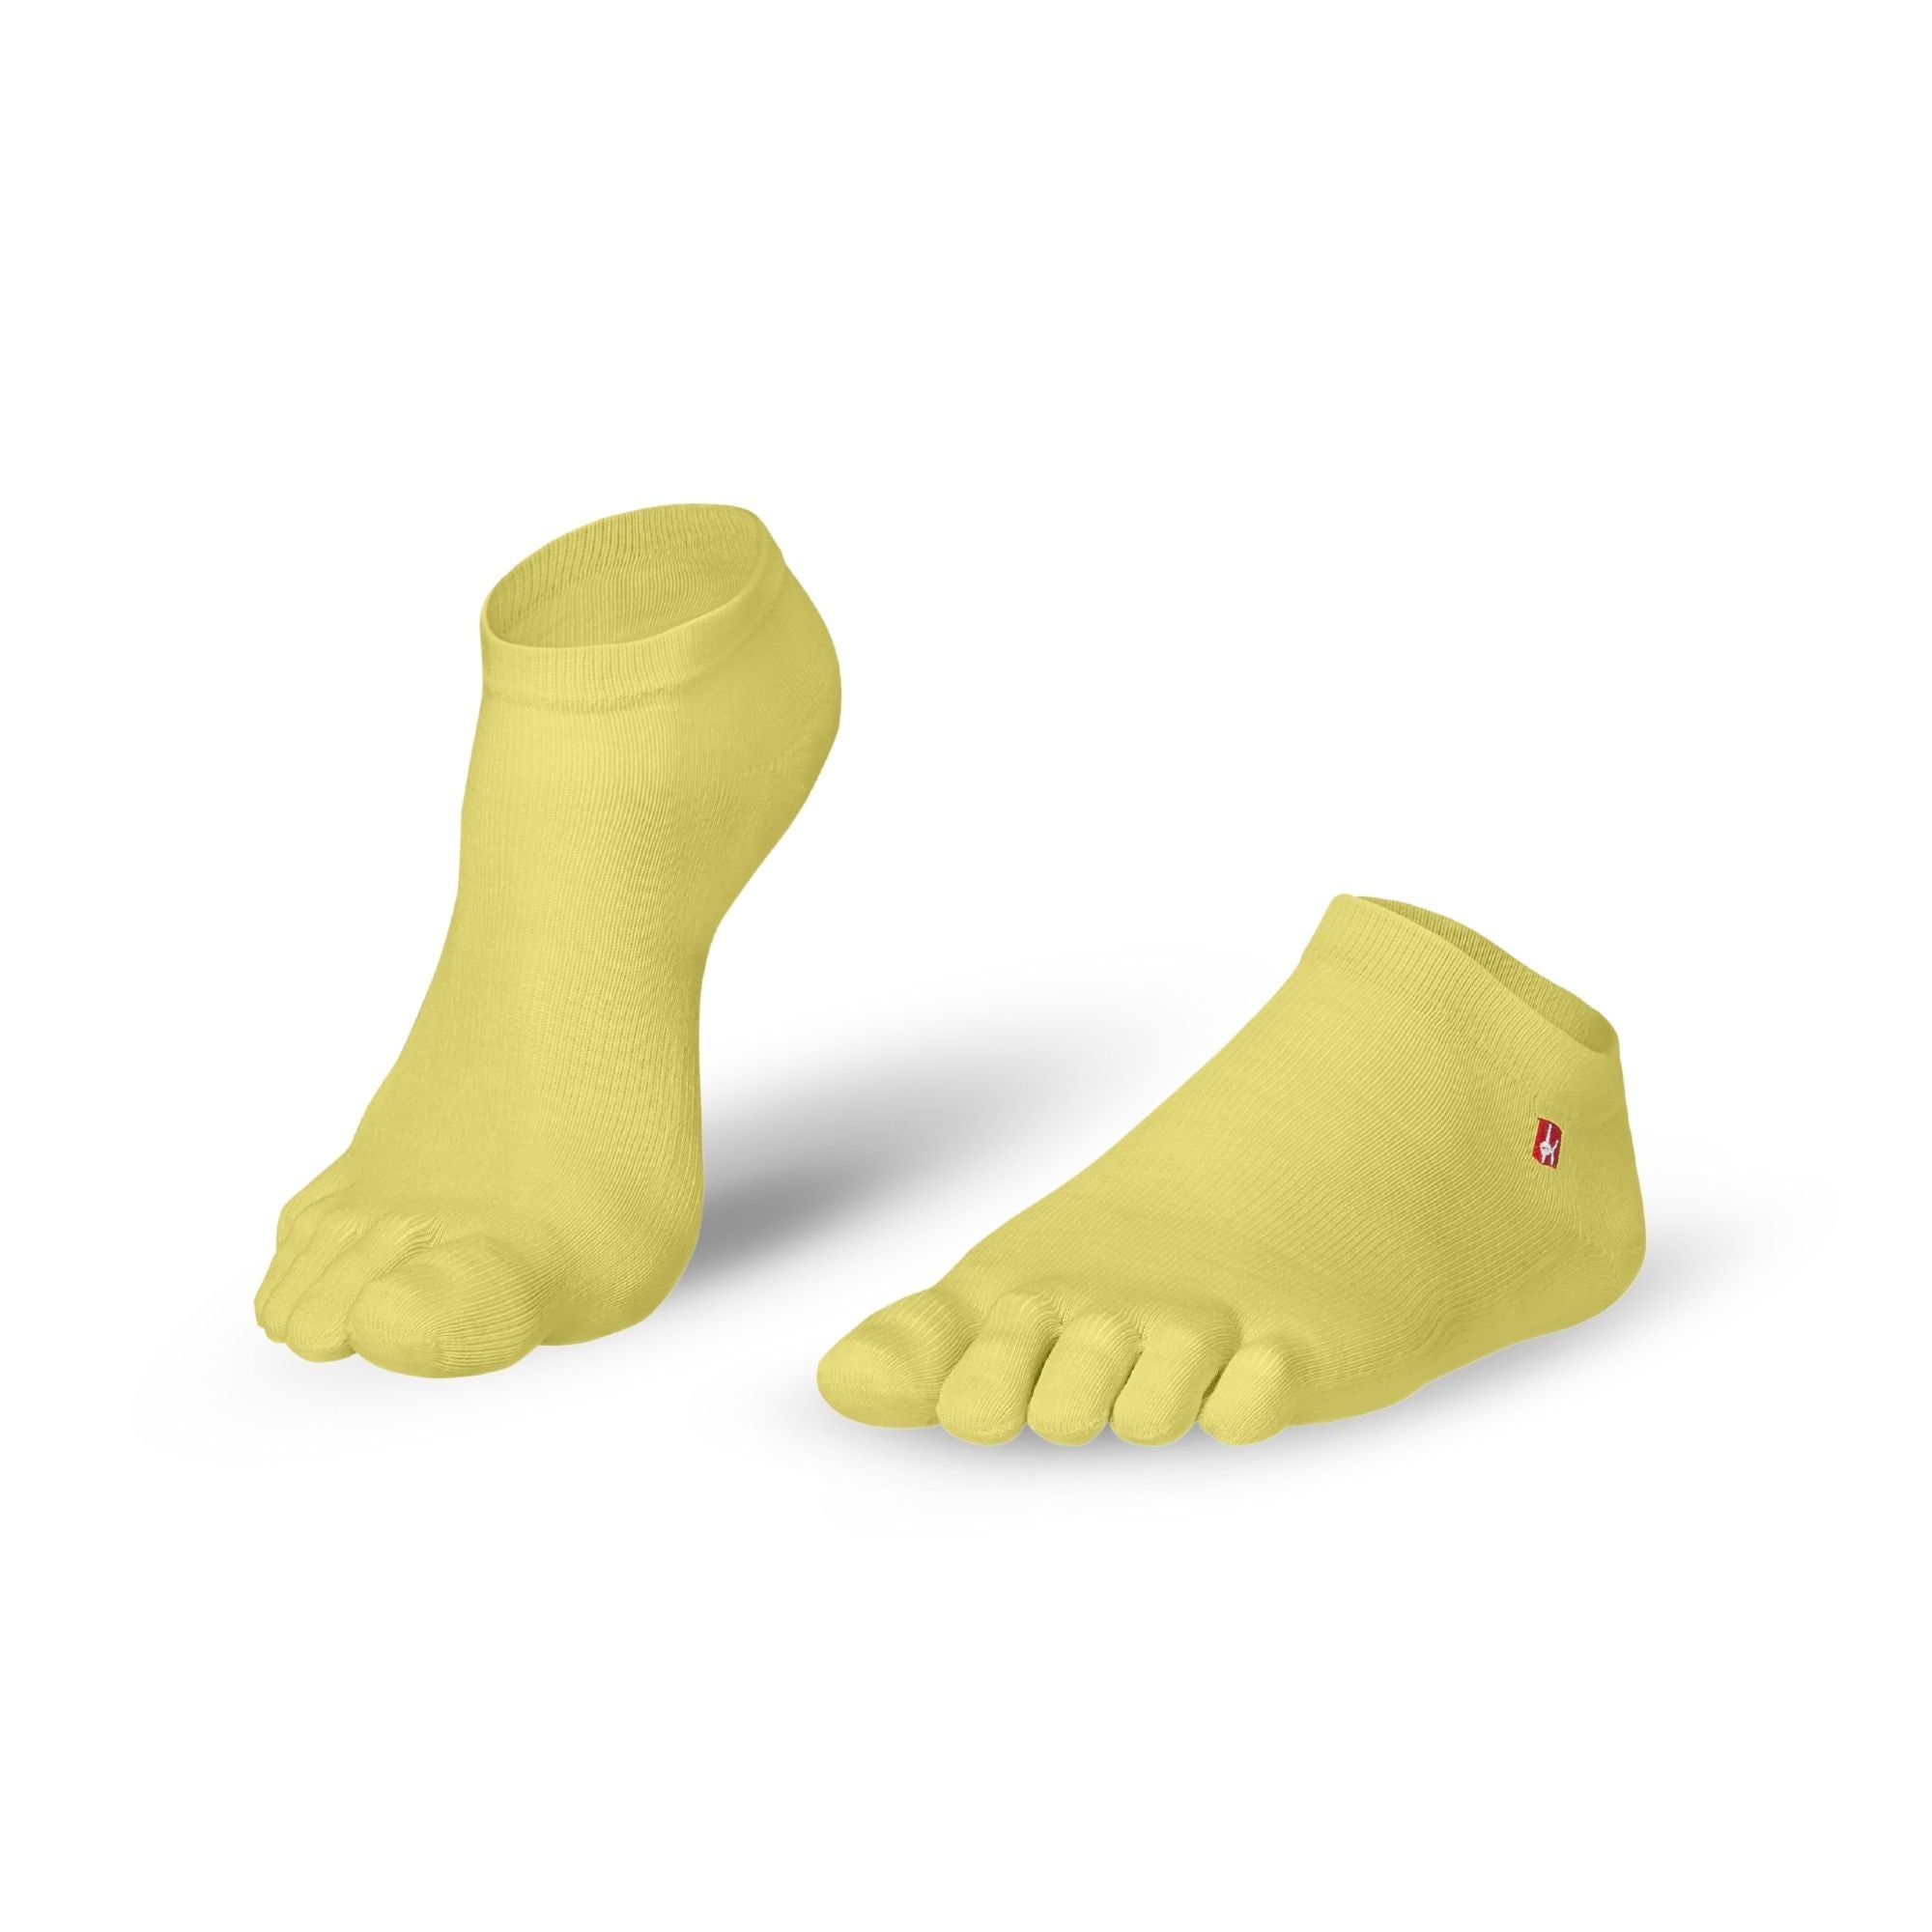 Calcetines de dedos Coolmax Sneaker de Knitido Track & Trail ultralite fresh en amarillo